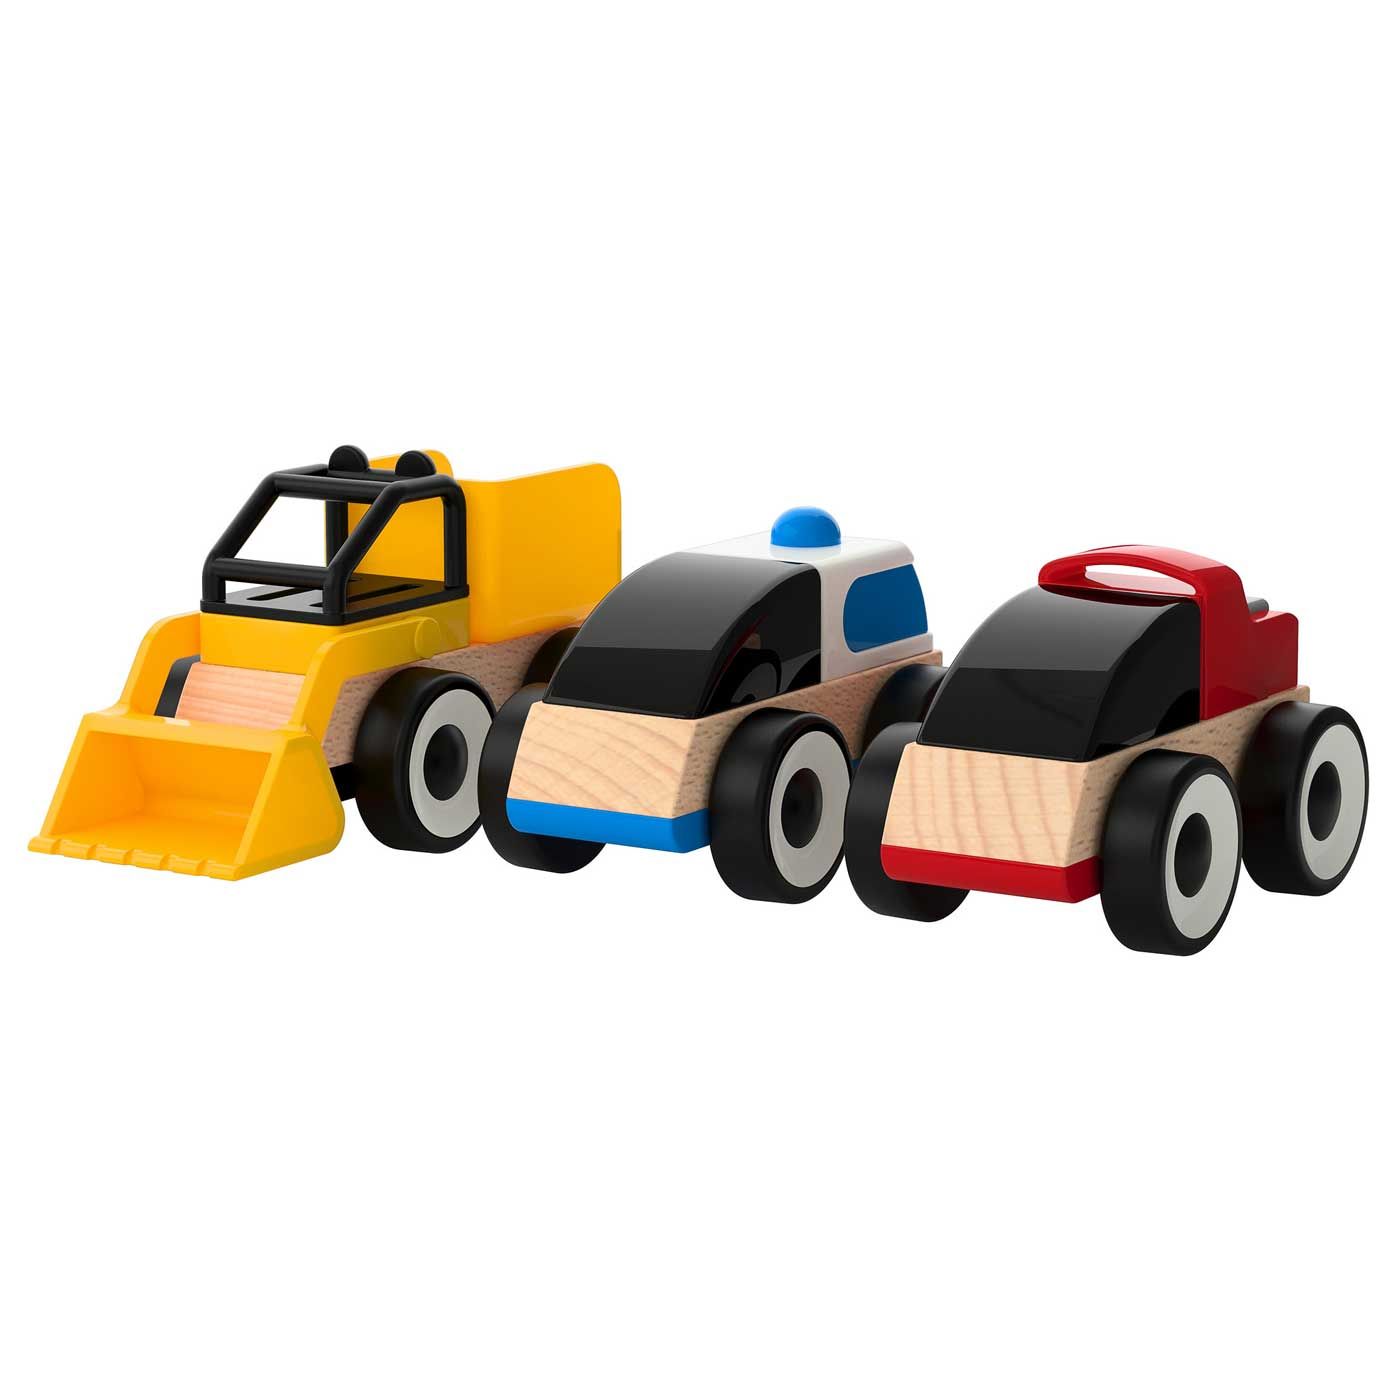 IKEA Lillabo Toy Vehicle - 1